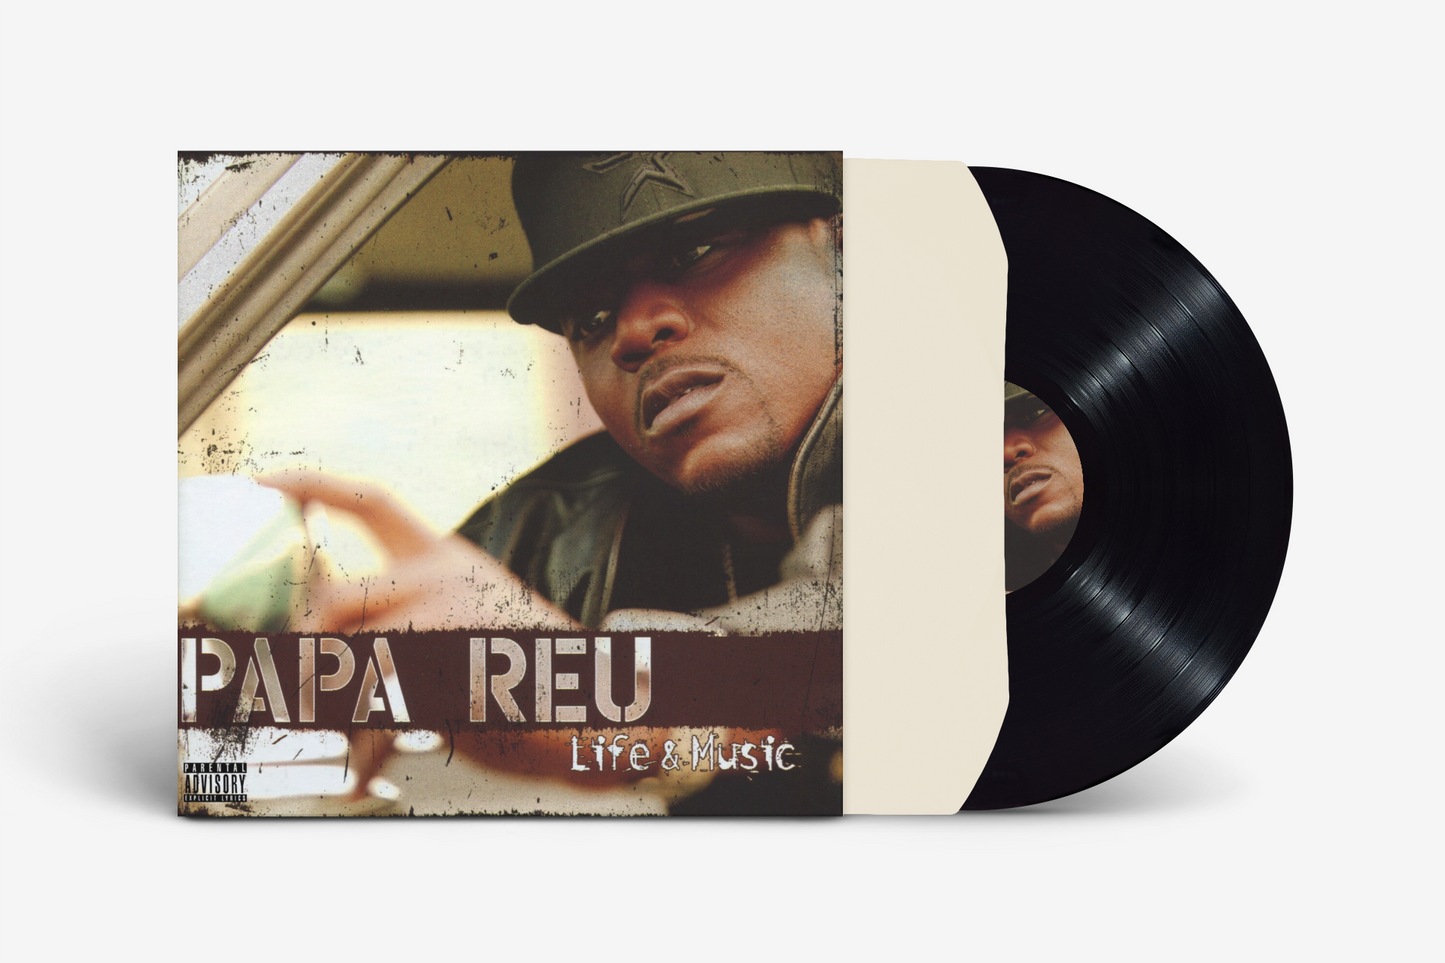 Papa Reu "Life & Music" Album on Vinyl. 